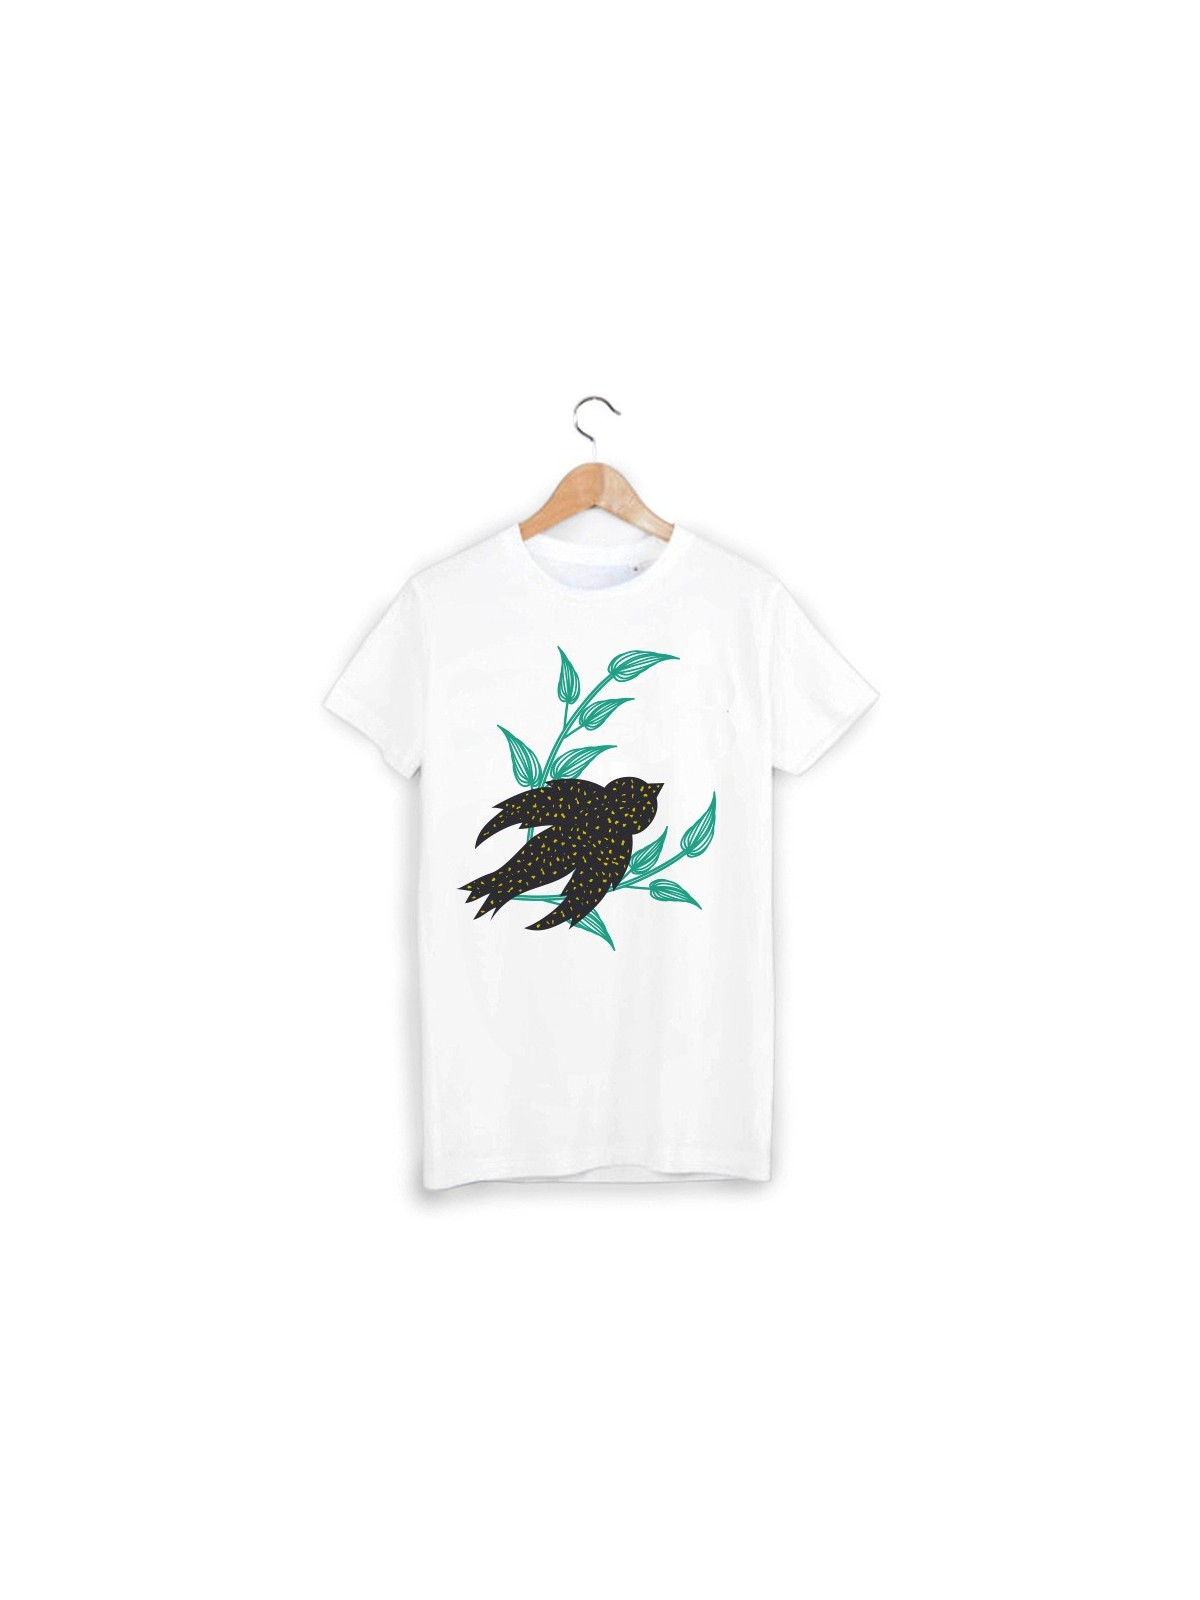 T-Shirt oiseau ref 1453